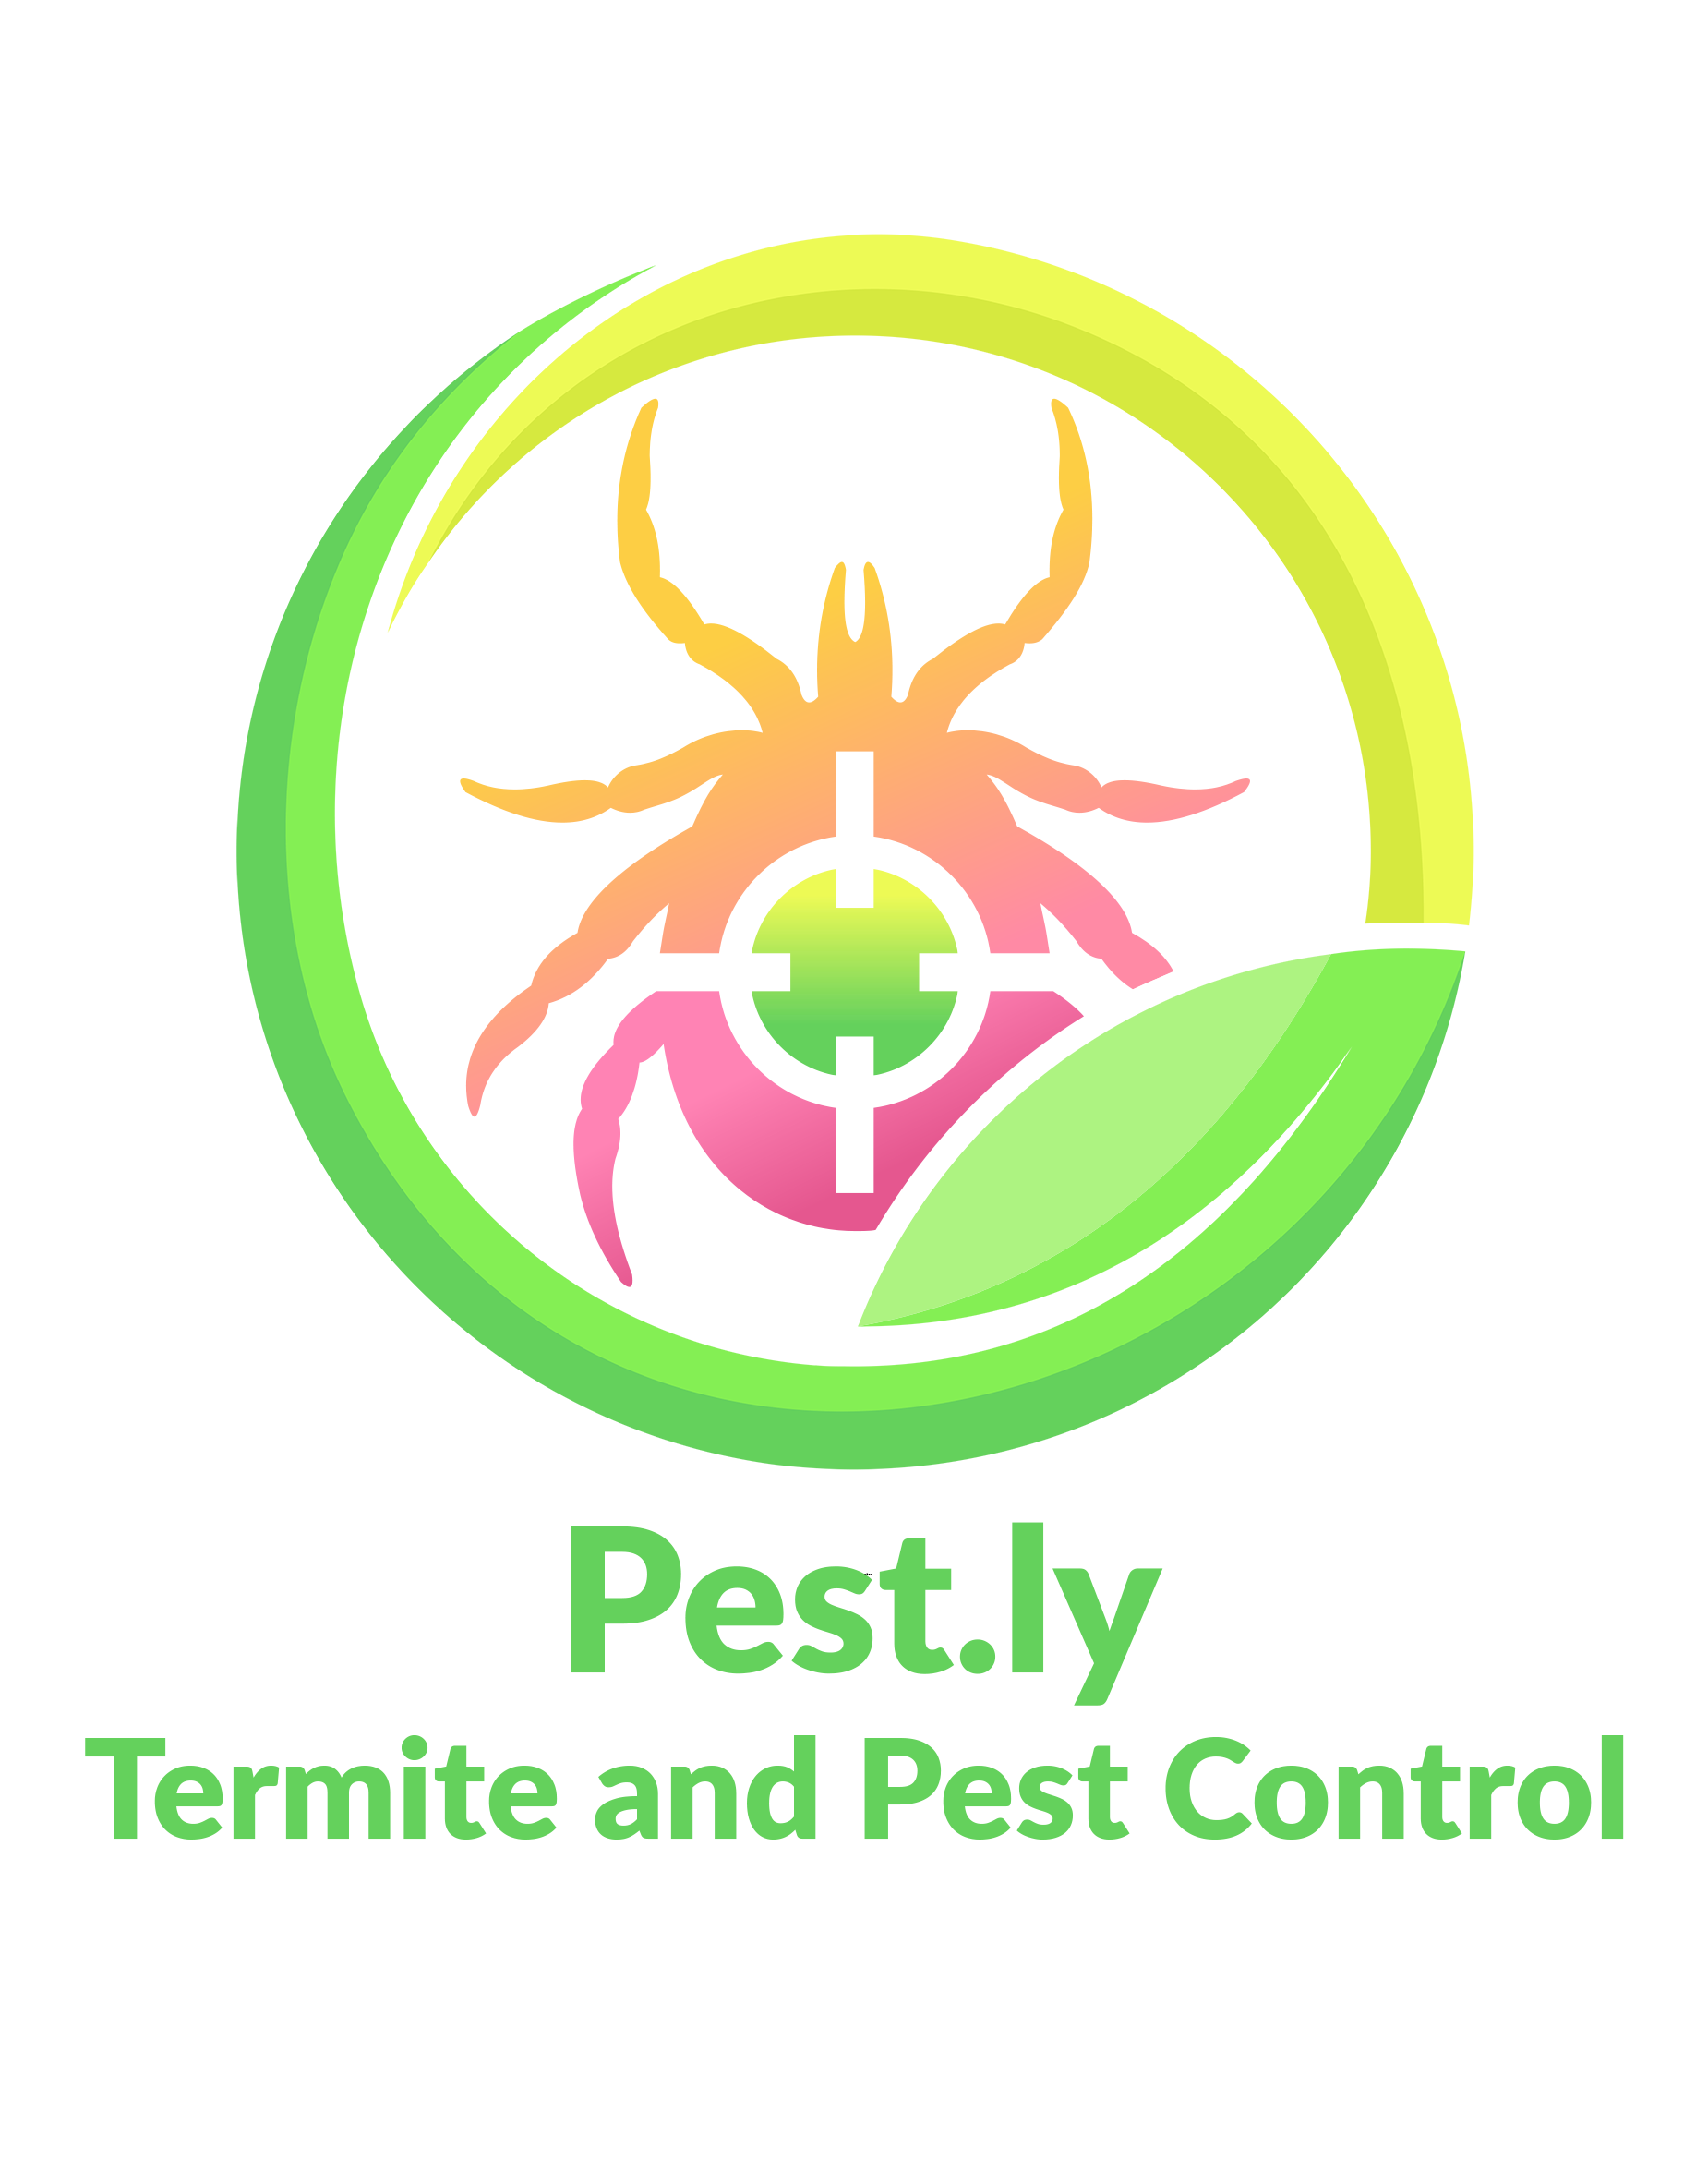 Pest.ly